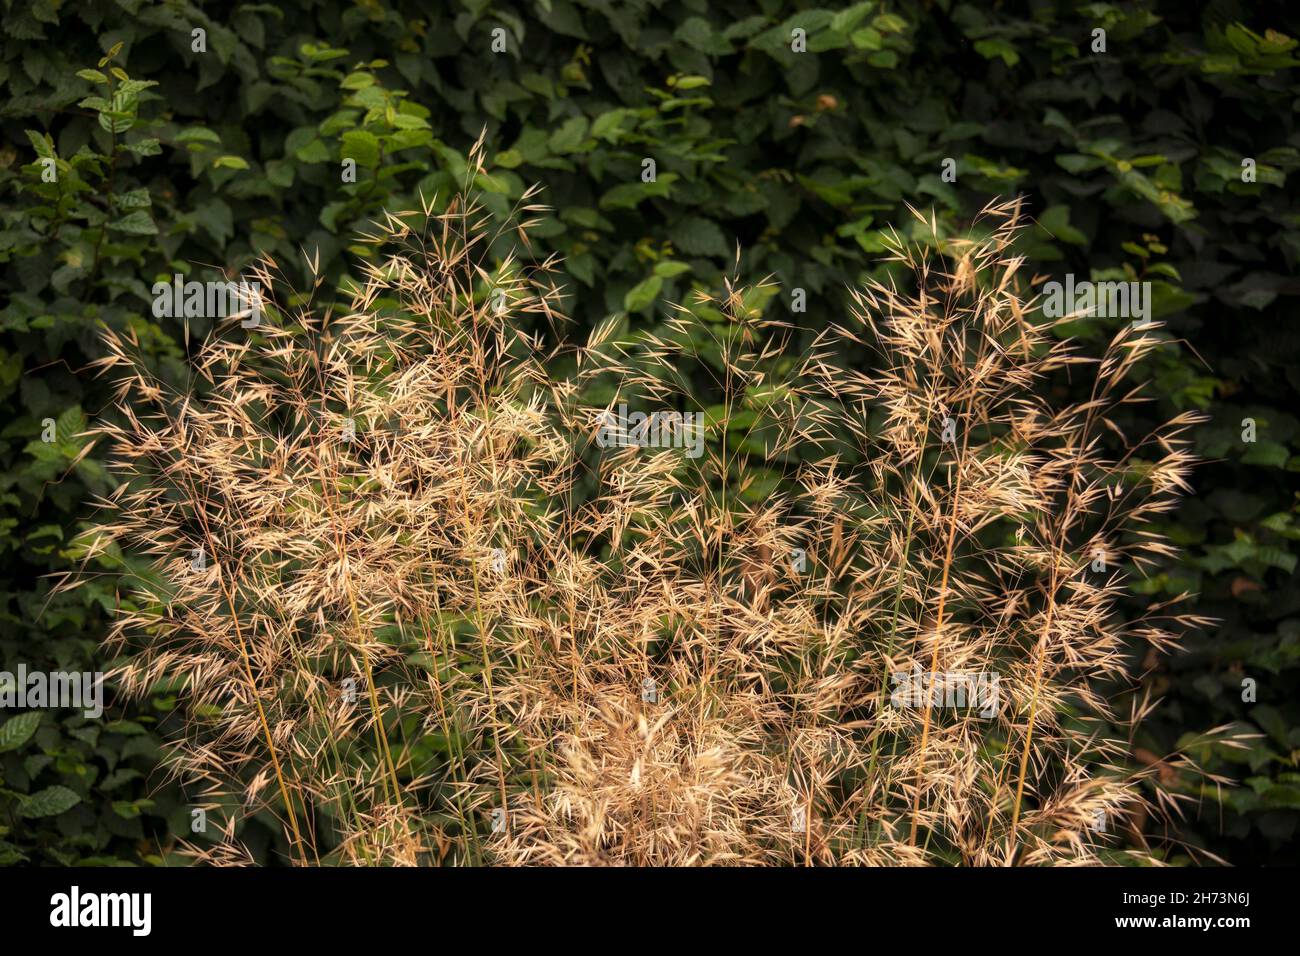 Clump of Stipa gigantea grass in a garden in summer Stock Photo